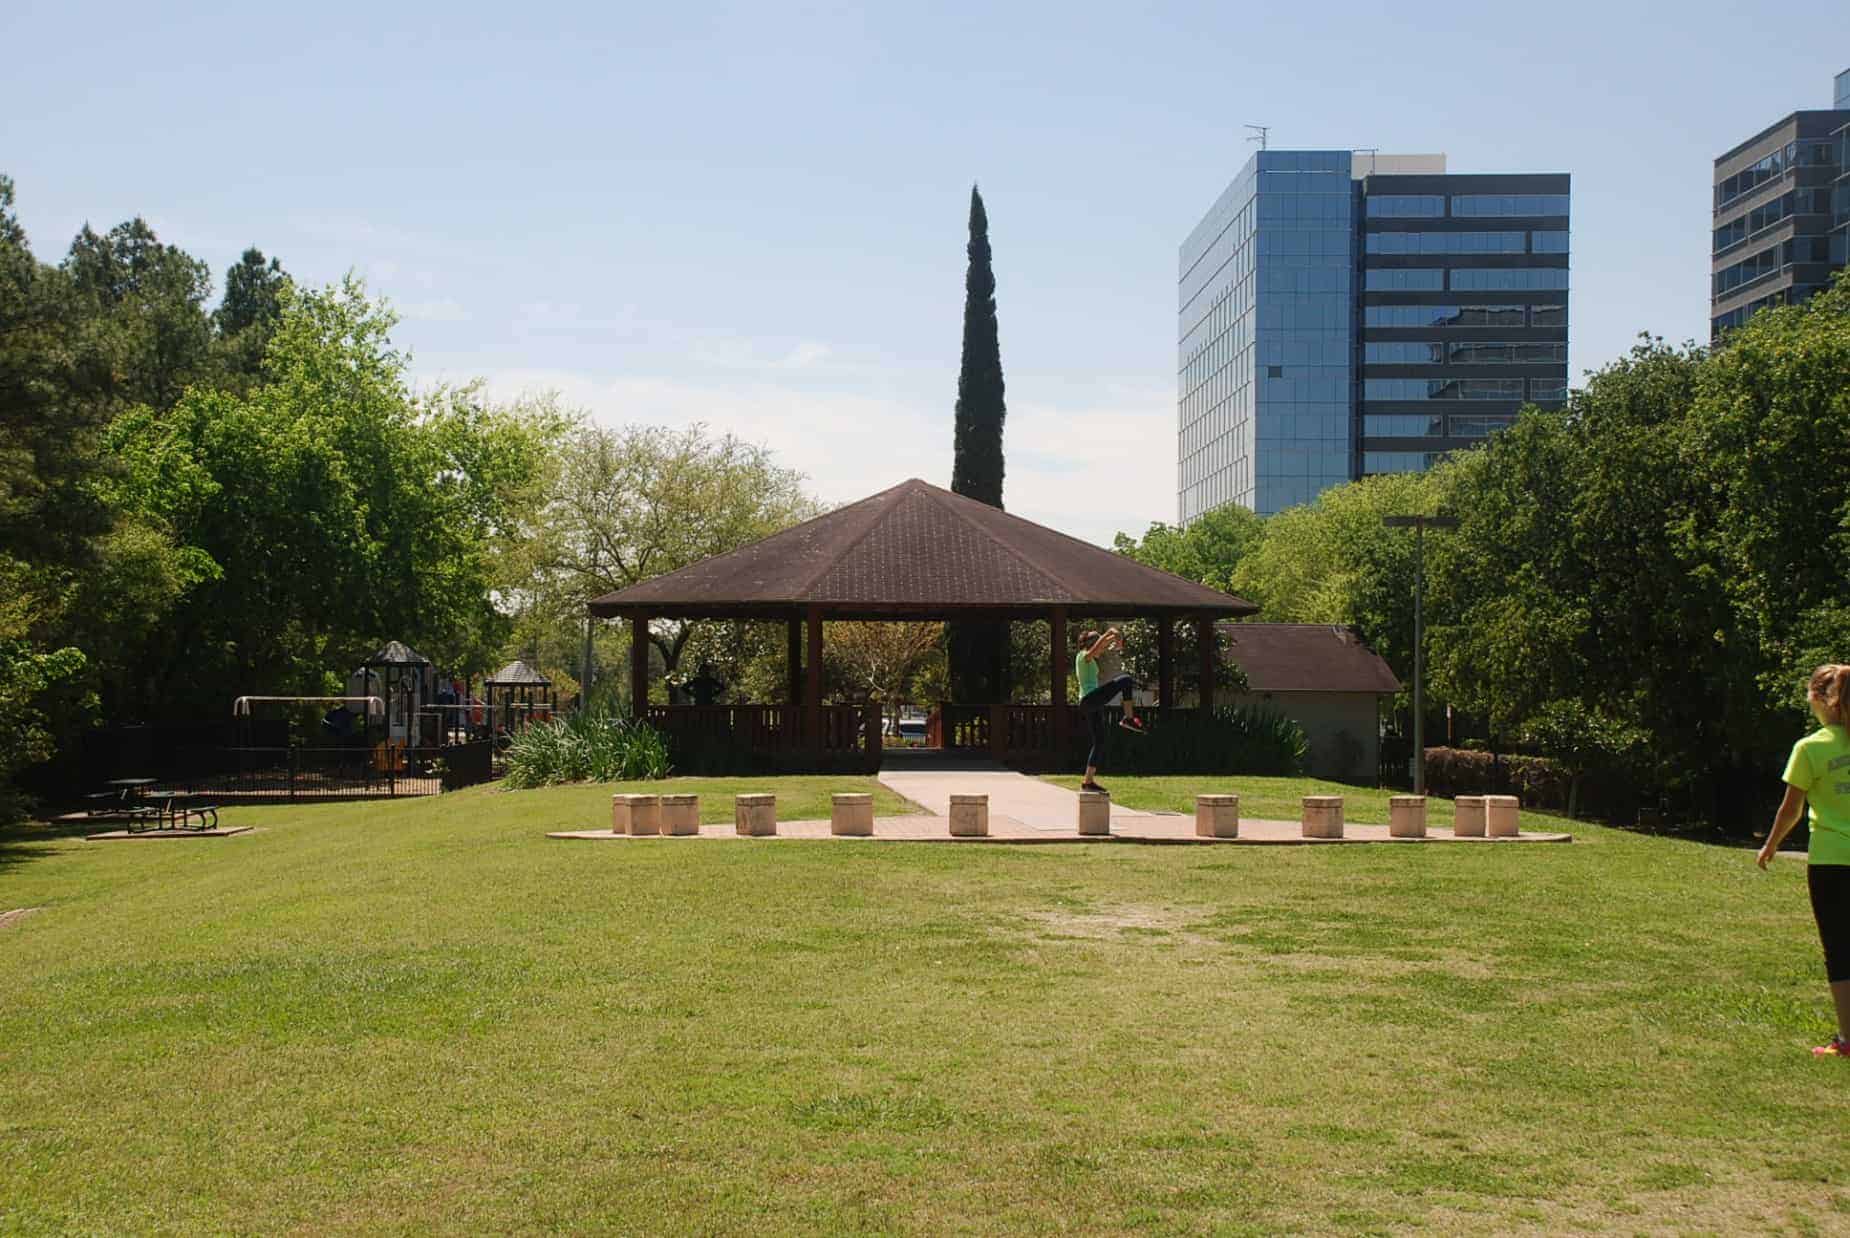 Gazebo & sundial at Terry Hershey Park Houston TX